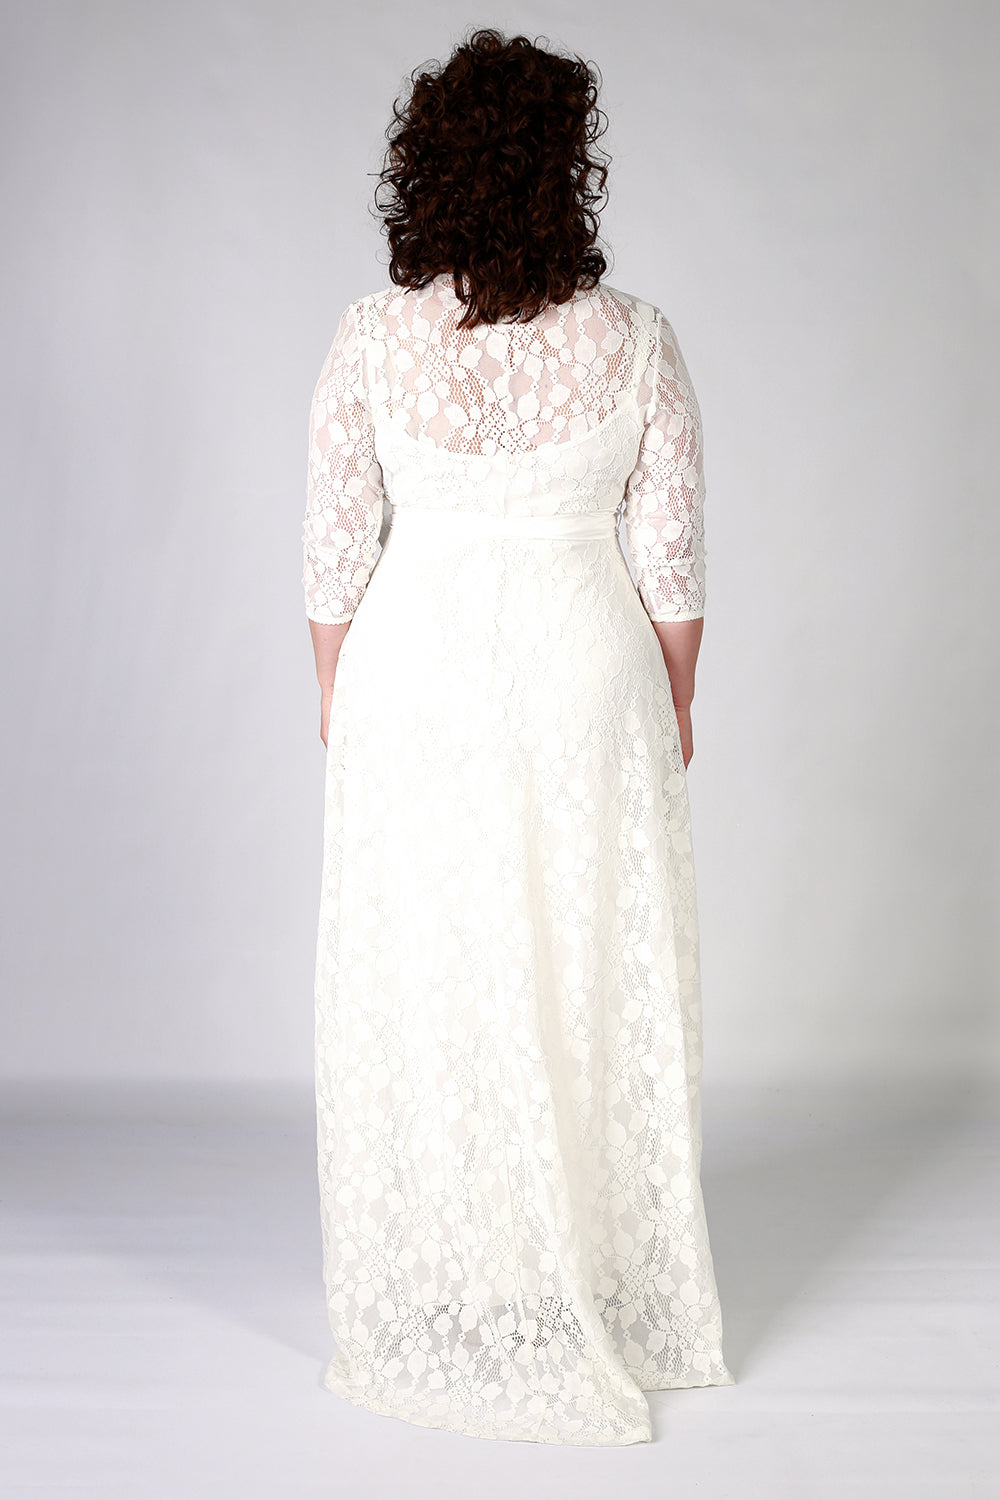 Sophie's Wedding Dress | Annah Stretton Bridal | Lace Wedding Dress | Affordable Designer Wedding Dress | Classic Modern Wedding Dress